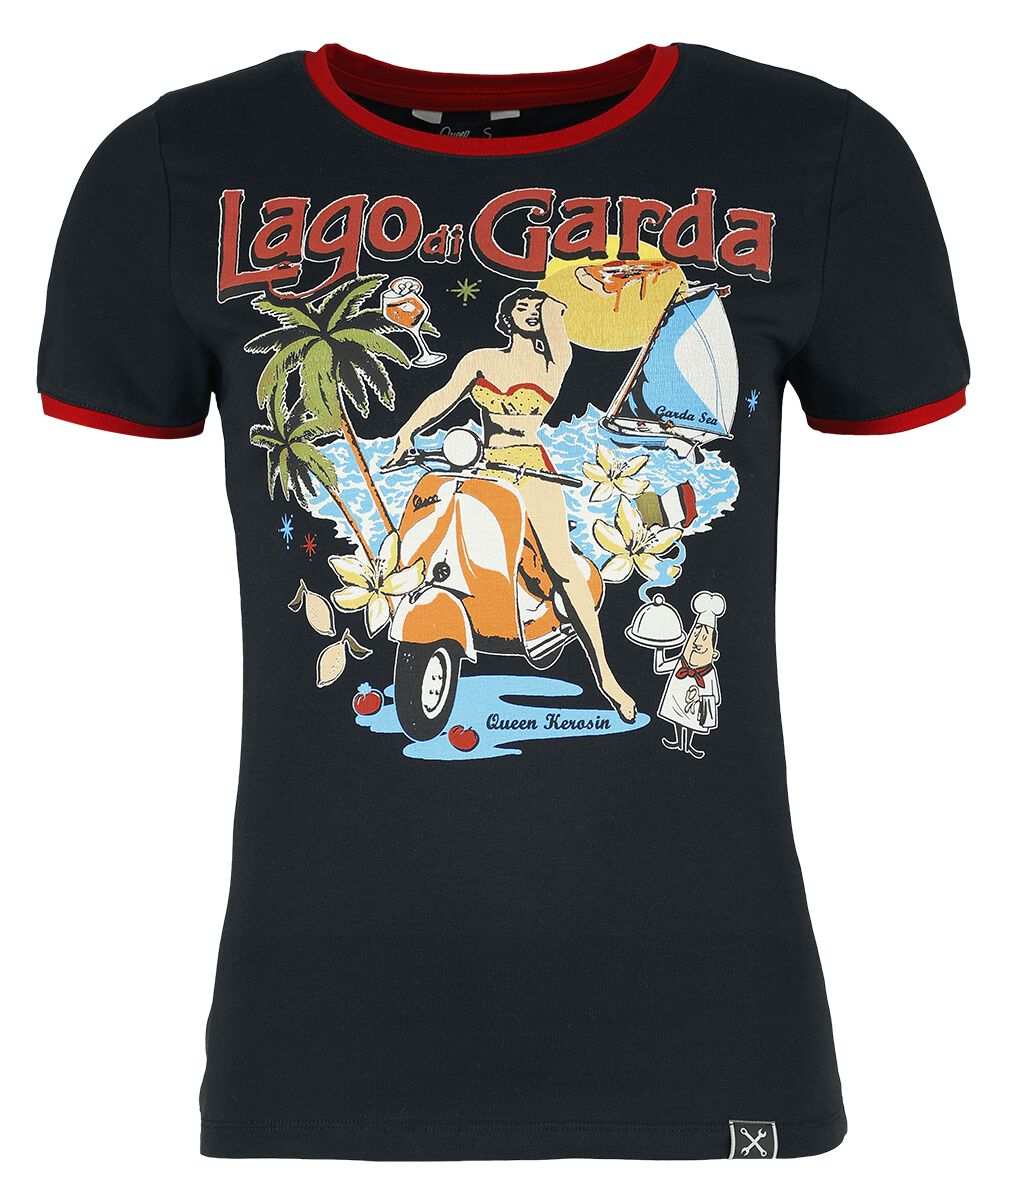 Queen Kerosin Lago Di Garda T-Shirt schwarz rot in S